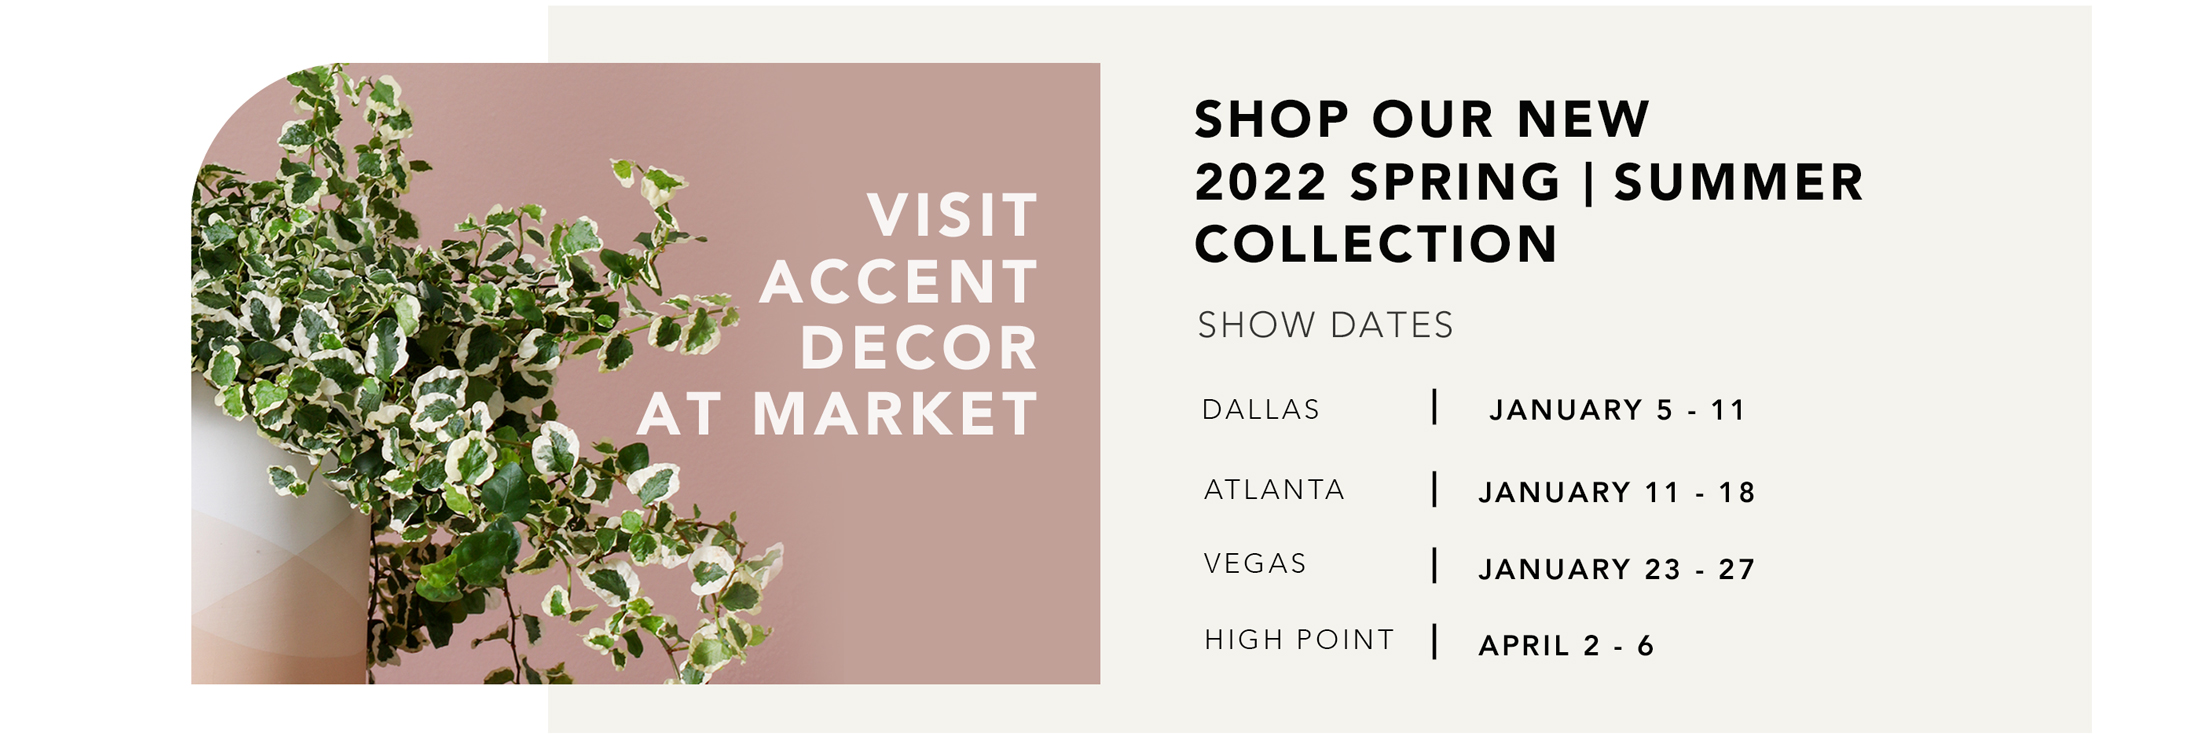 Visit Accent Decor At Market | Atlanta: Jan 5 - 11 | Dallas: Jan 11 - 18 | Vegas: Jan 23 - 27